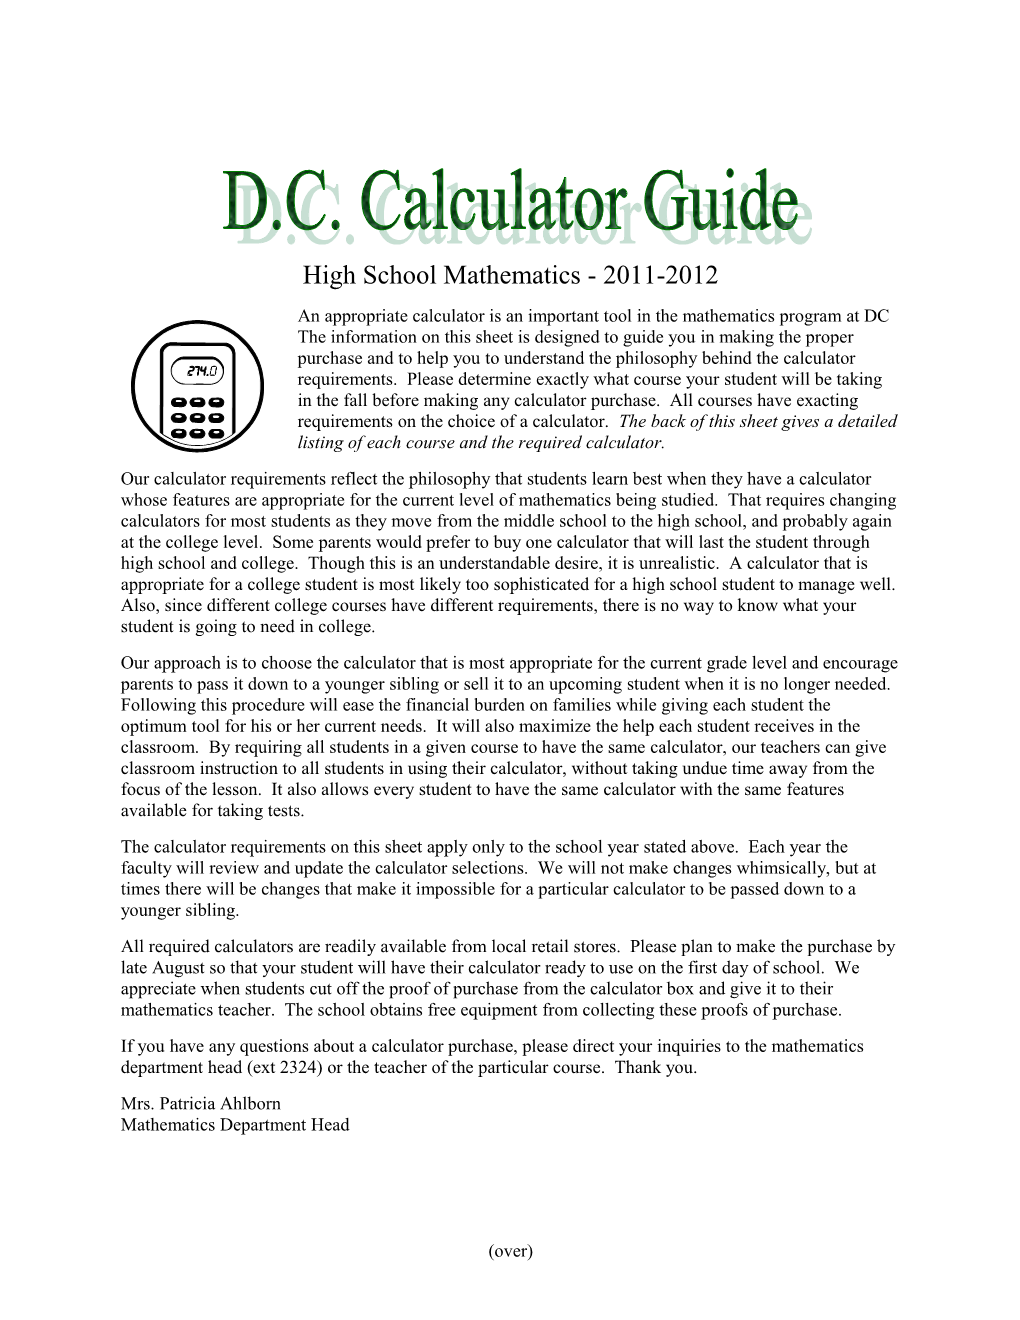 DC Calculator Guidehigh School Mathematics 2011-2012